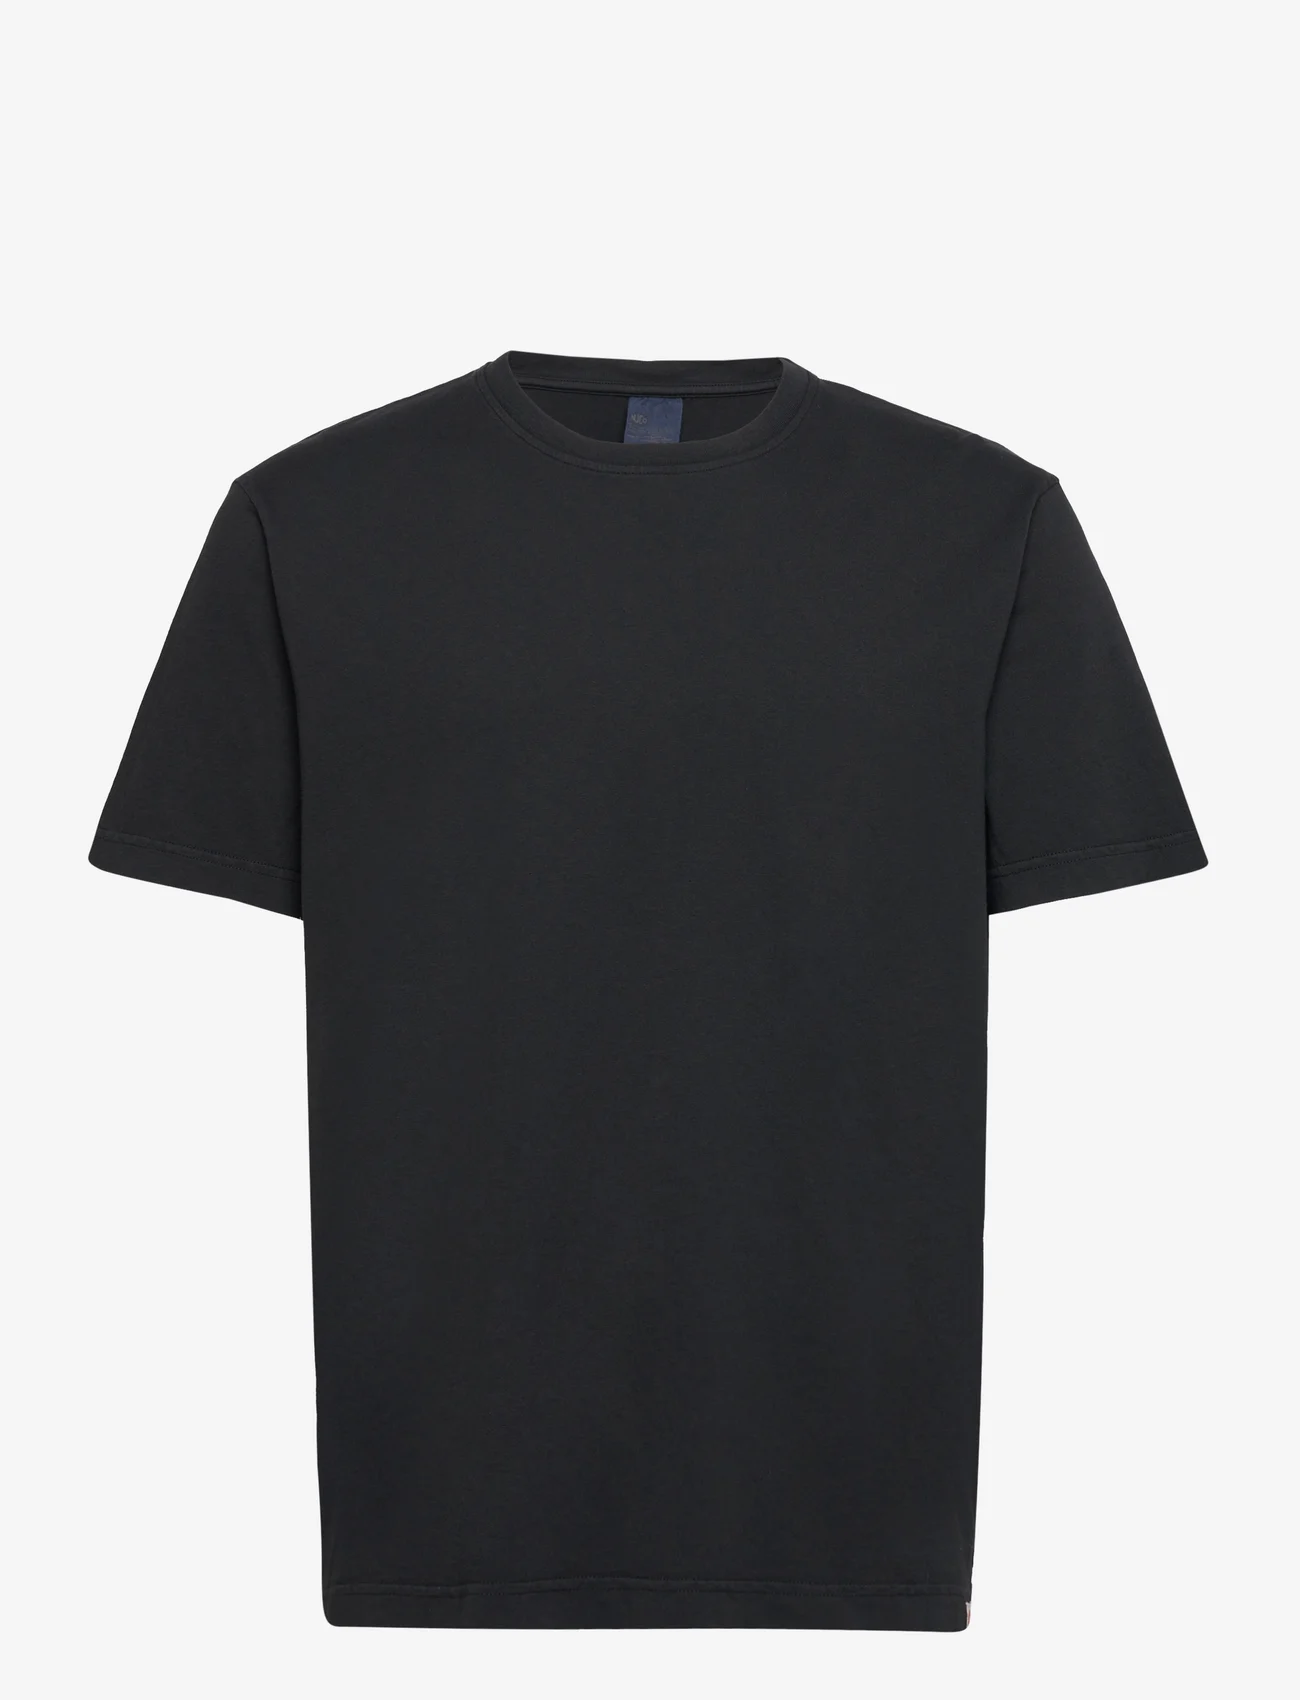 Nudie Jeans - Uno Everyday Tee Black - kortärmade t-shirts - black - 1